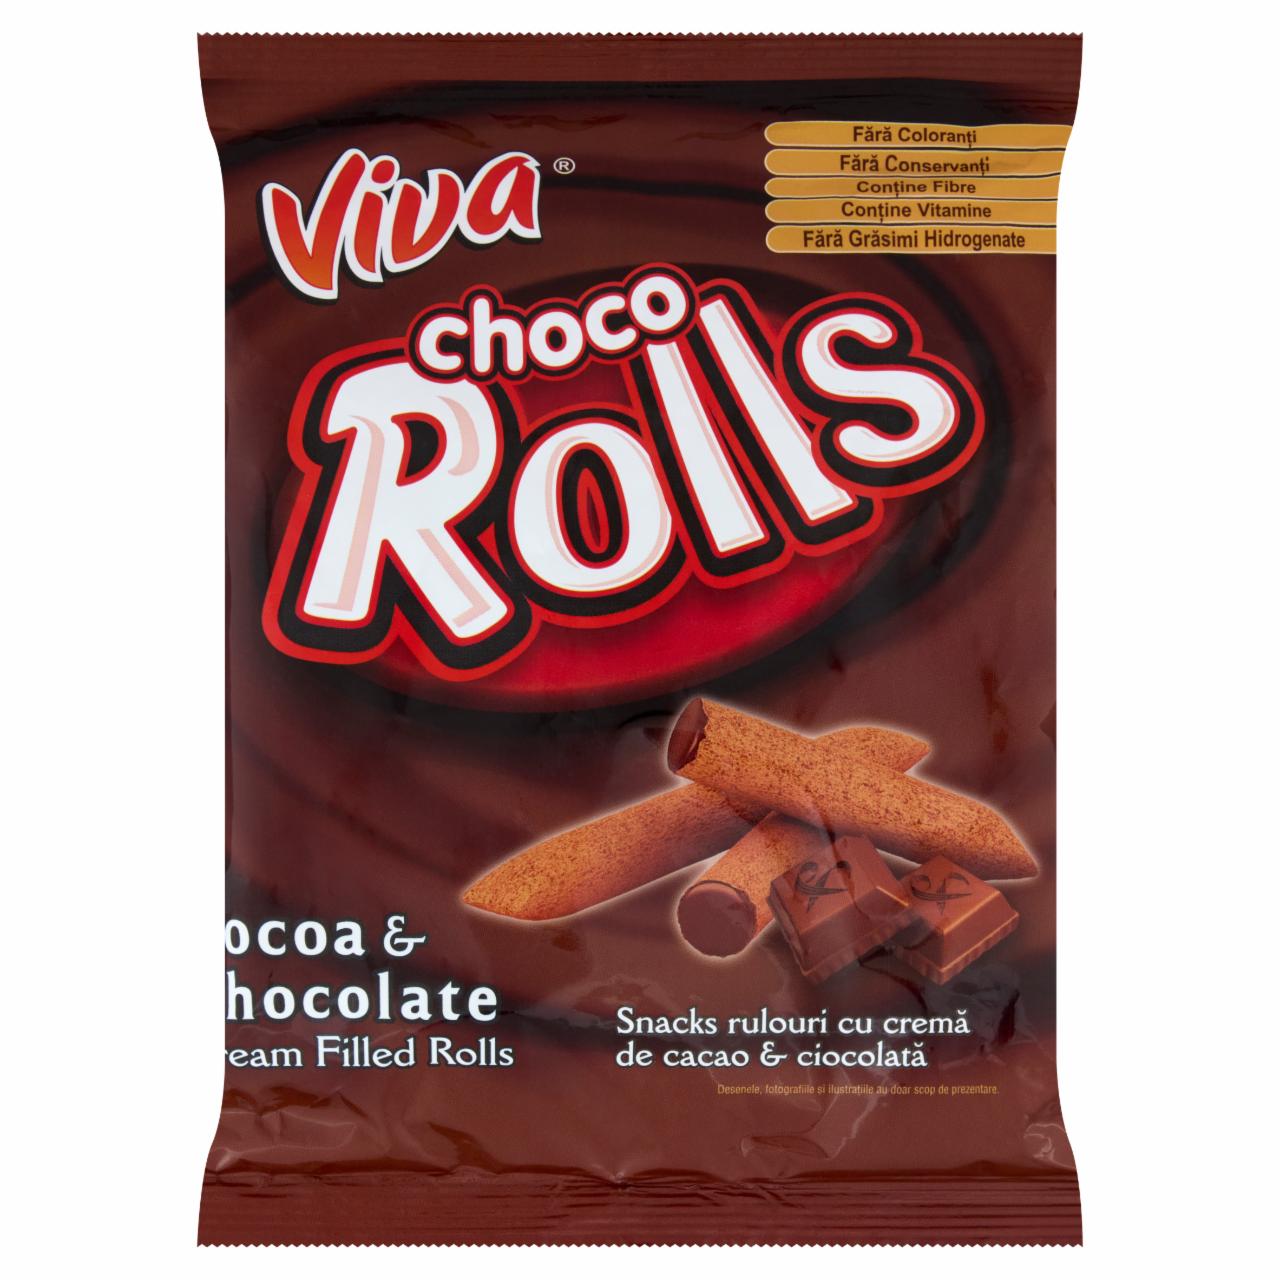 Фото - Choco rolls cocoa & chocolate Viva